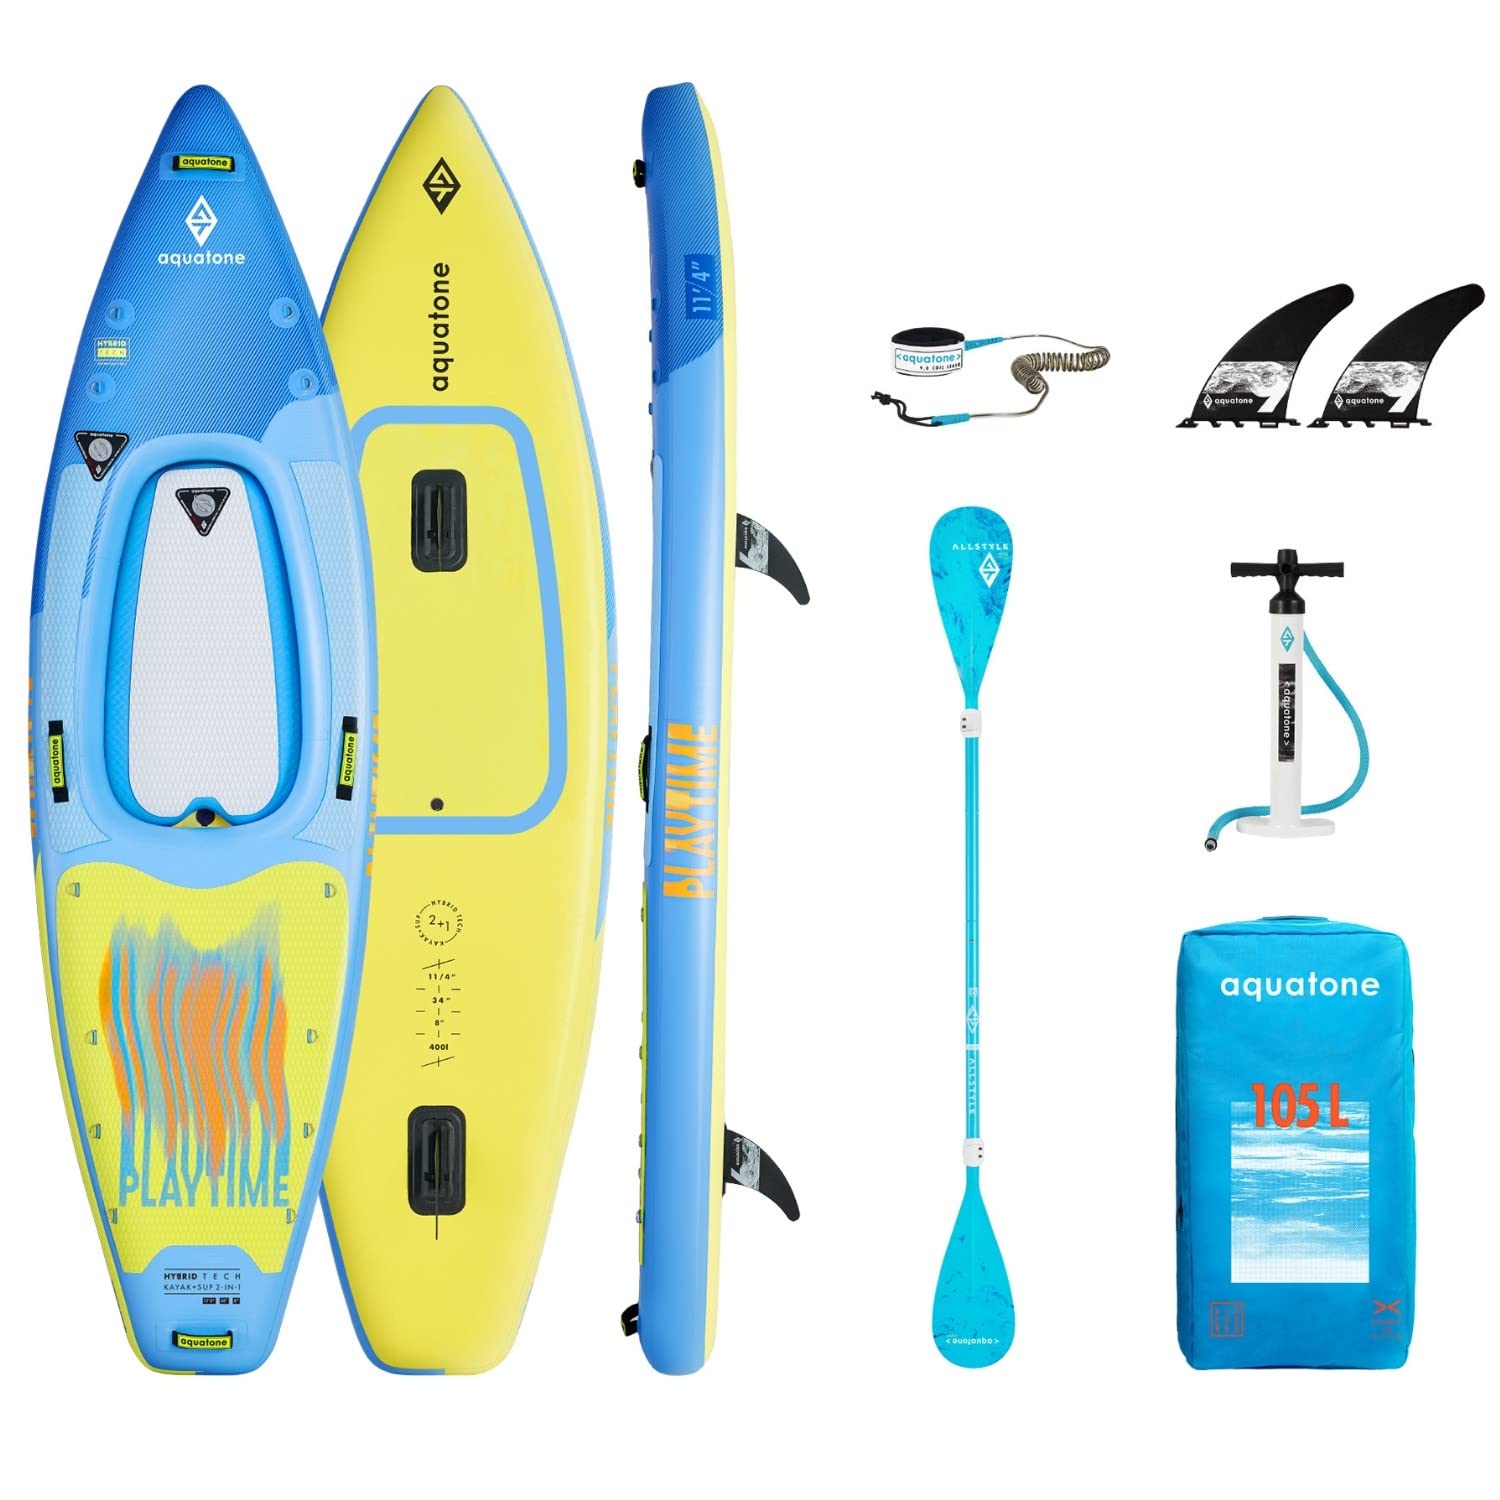 Aquatone Playtime HYBRID SUP und Kayak 11'4" iSUP Set, 345x86x20cm, Volumen 400L